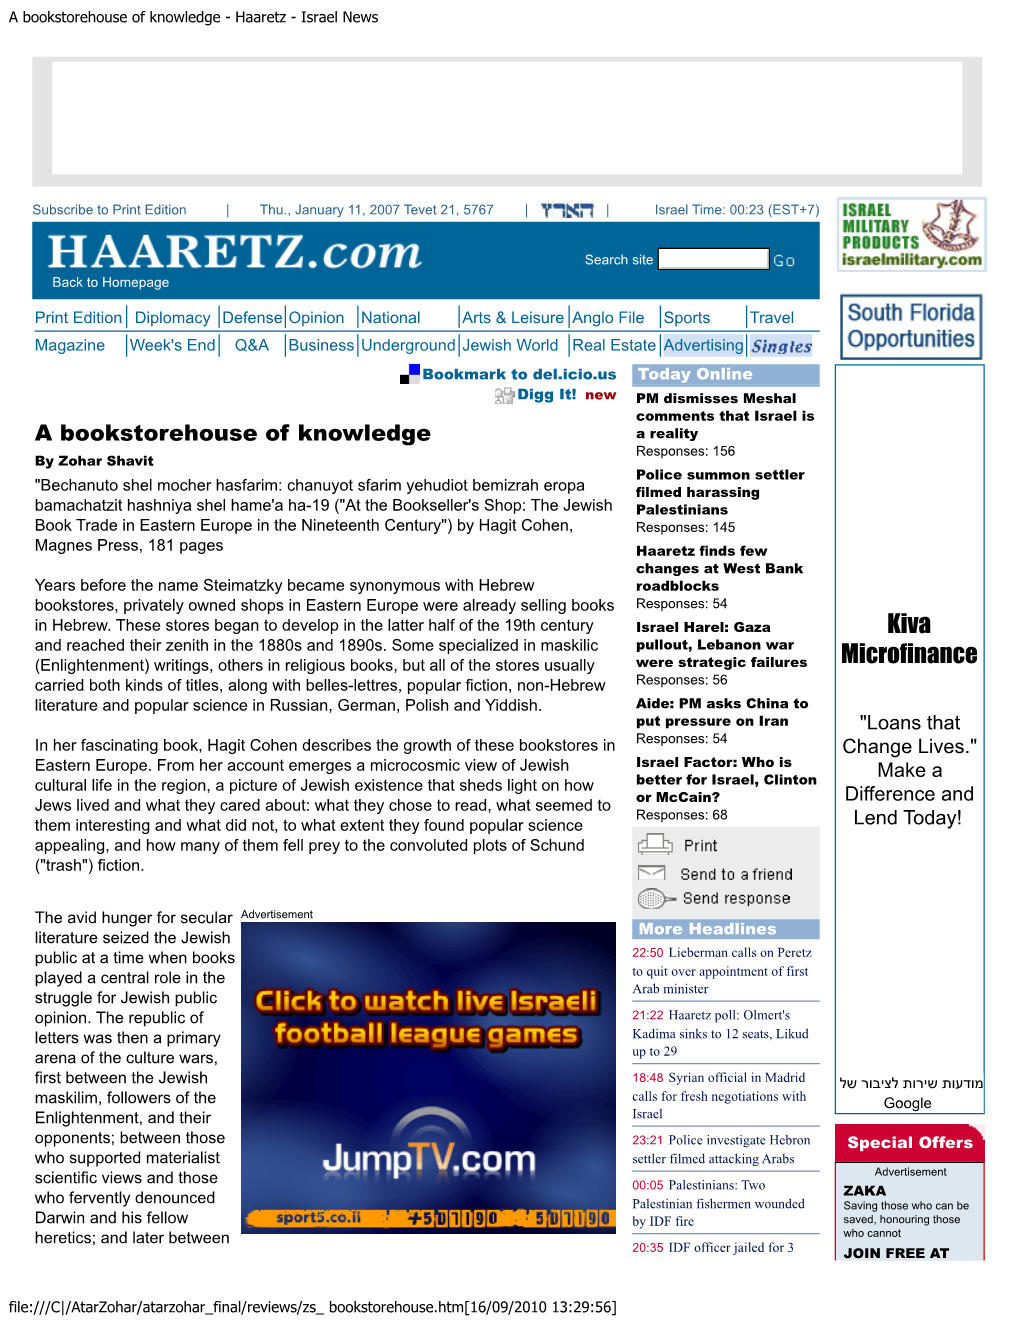 A Bookstorehouse of Knowledge - Haaretz - Israel News